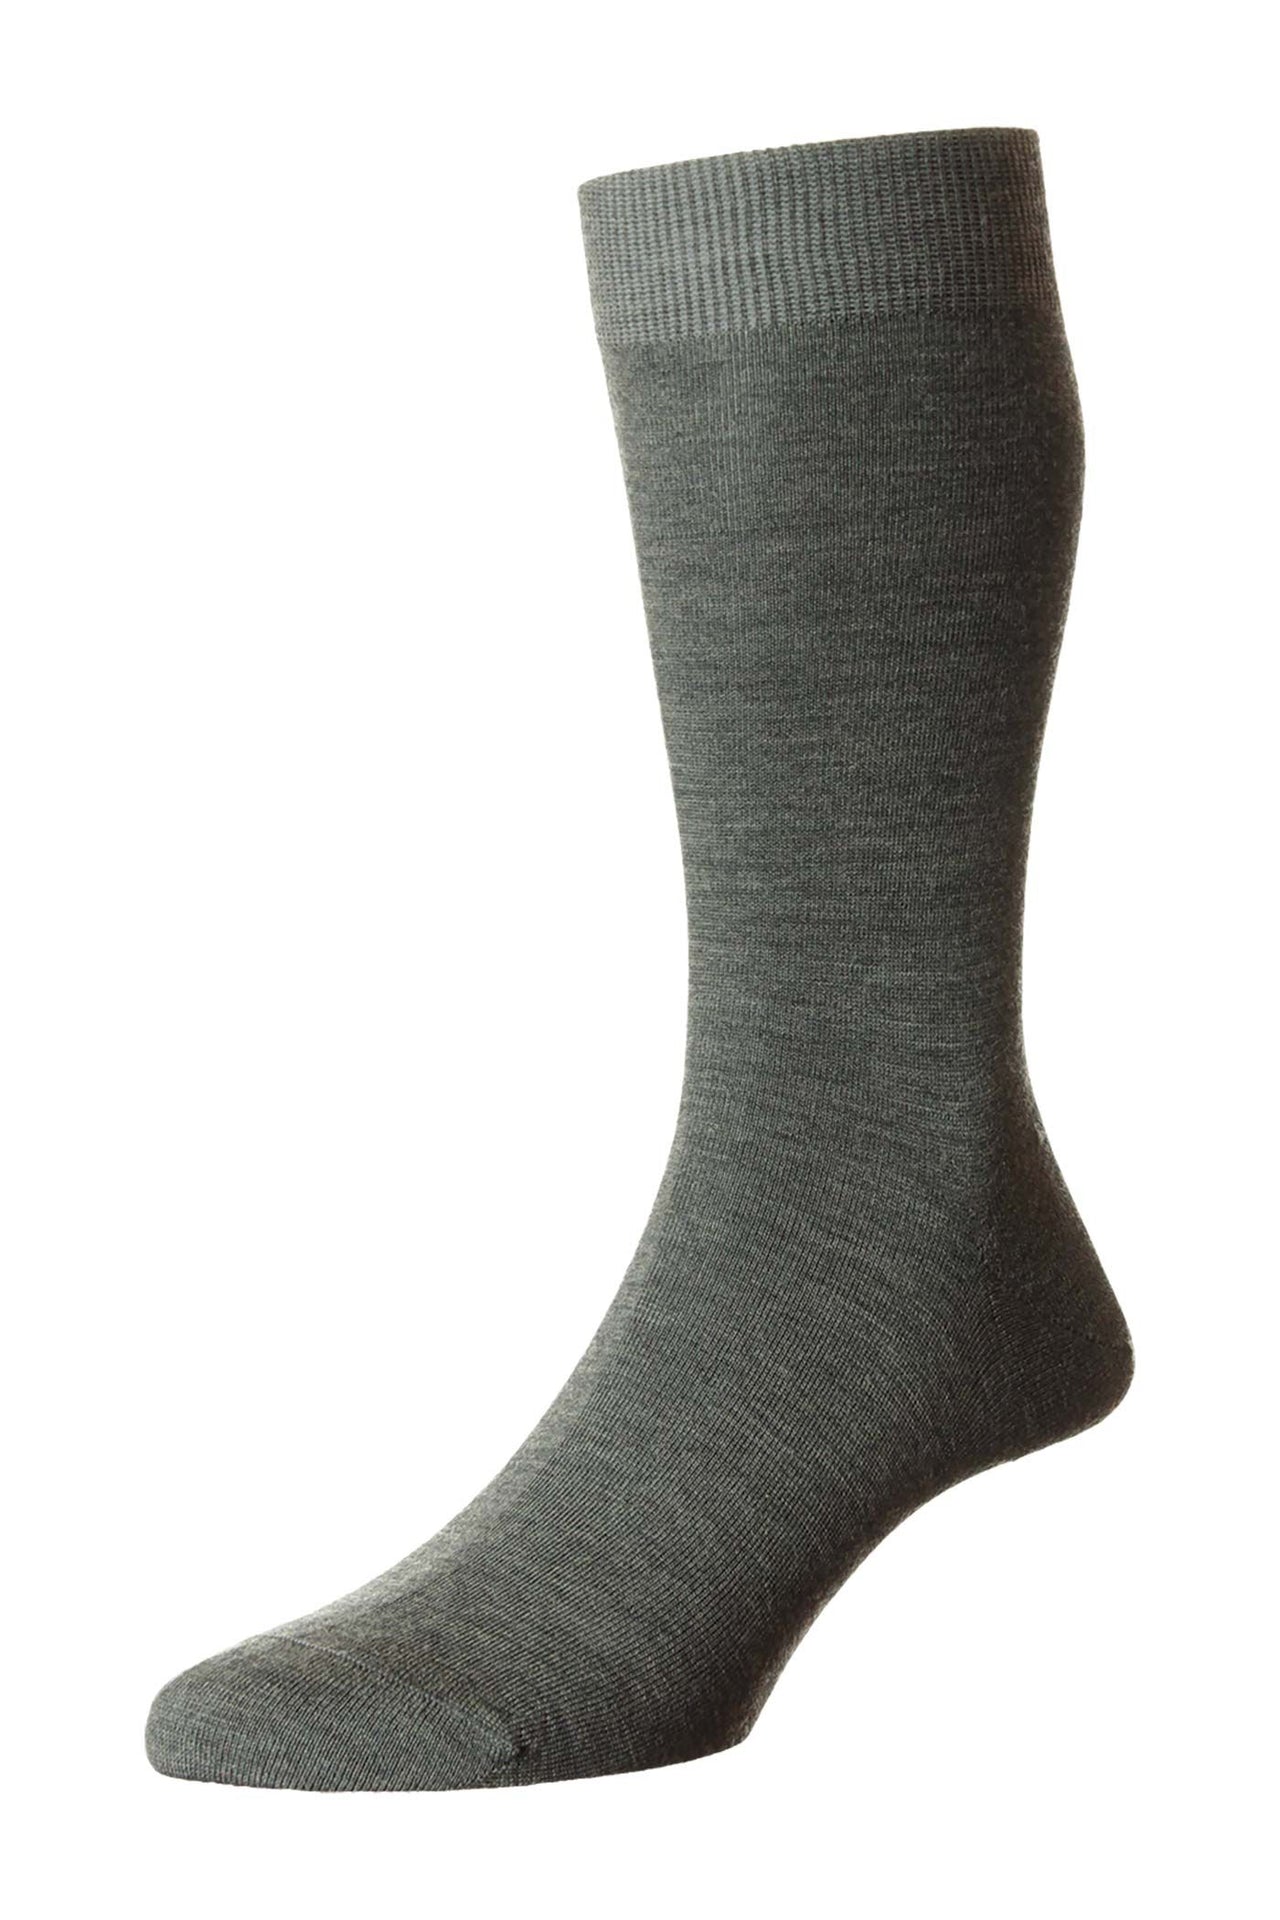 PANTHERELLA Wool Blend Socks MID GREY